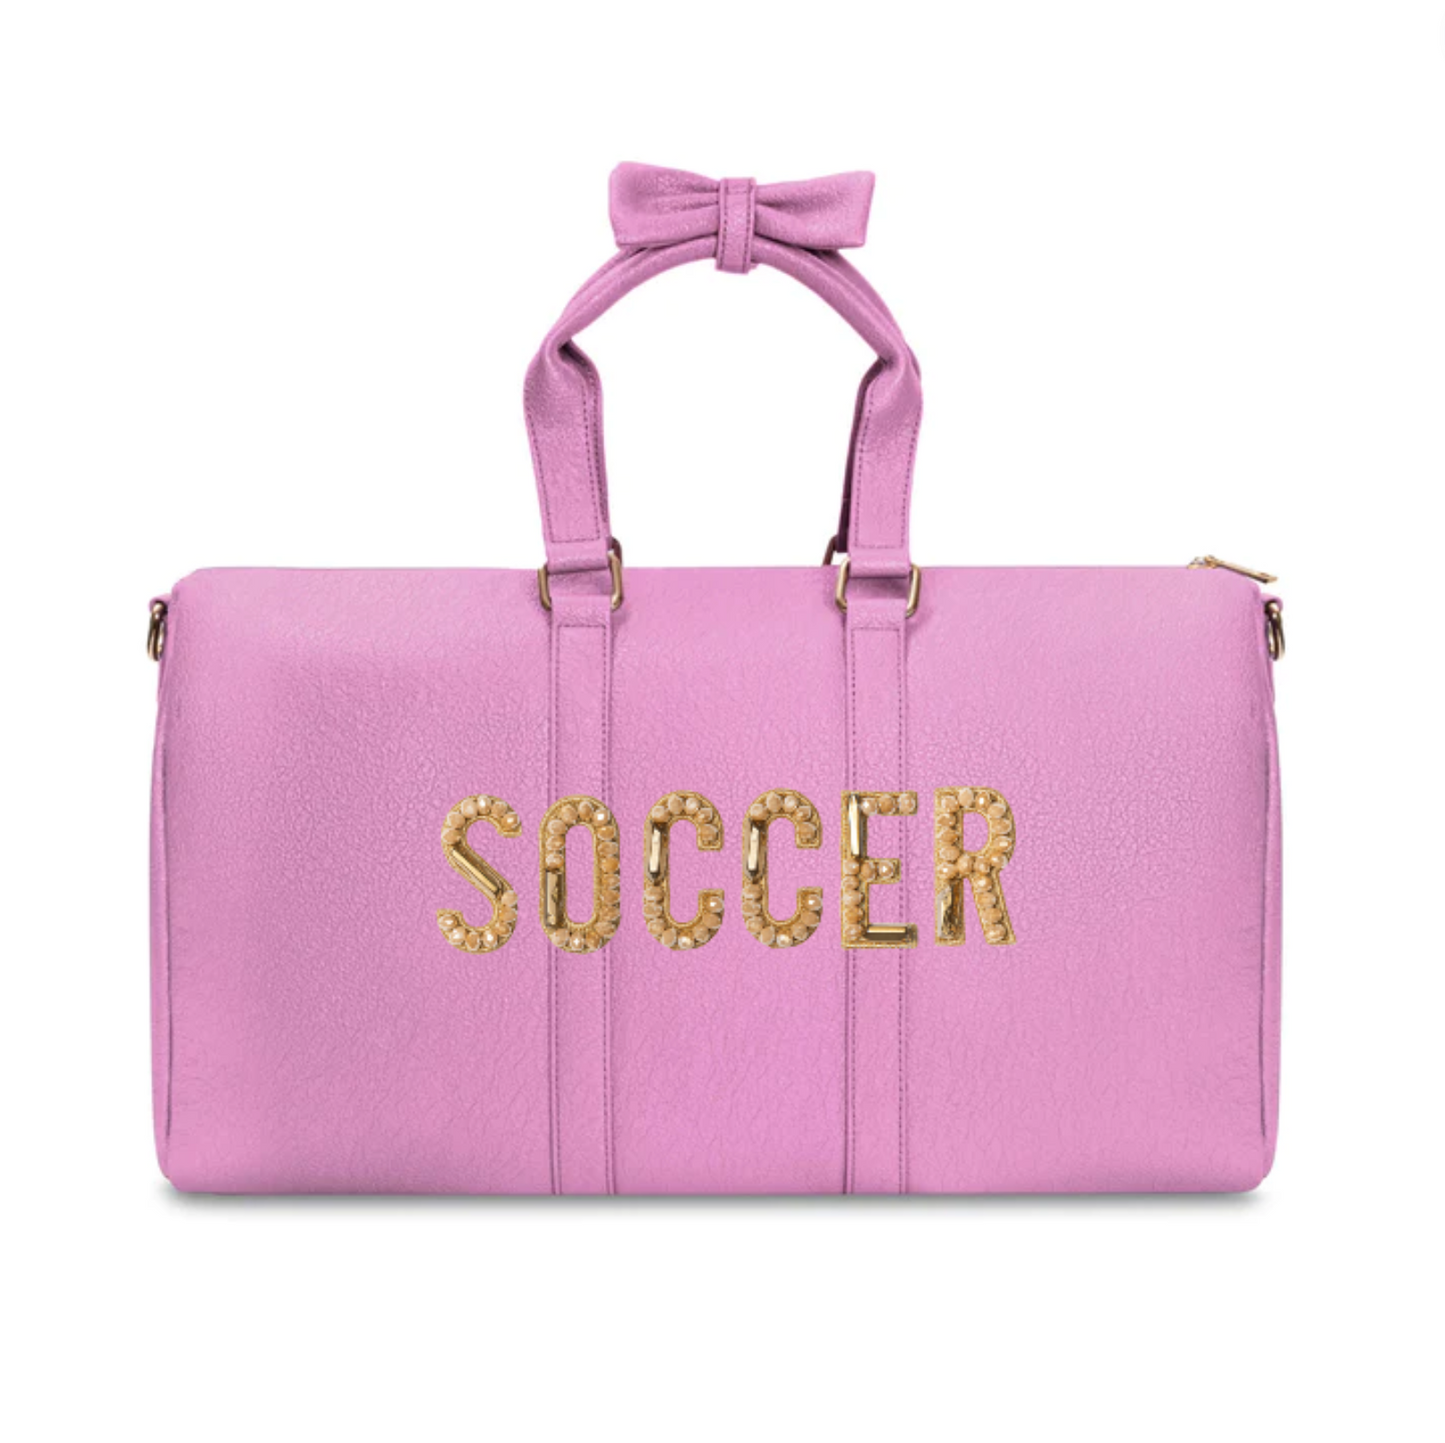 Soccer Duffle Bag